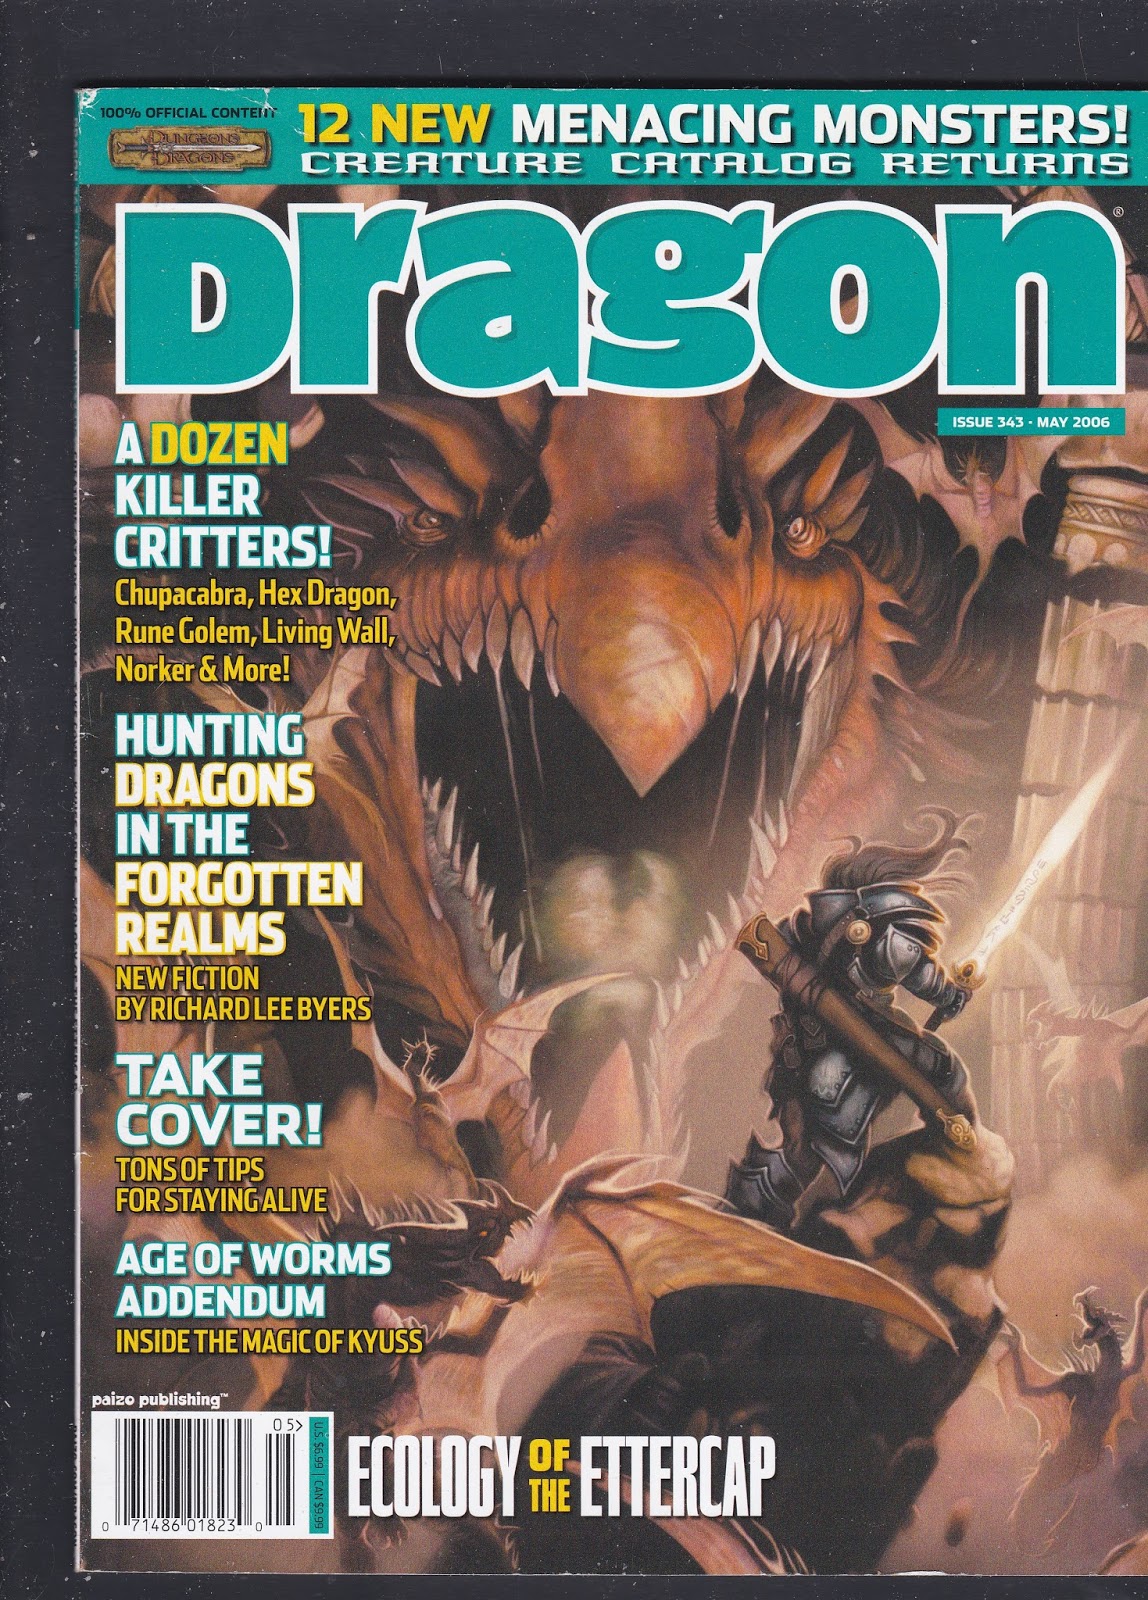 Hall of the Mountain King: Dragon Magazine #343 Cover Art